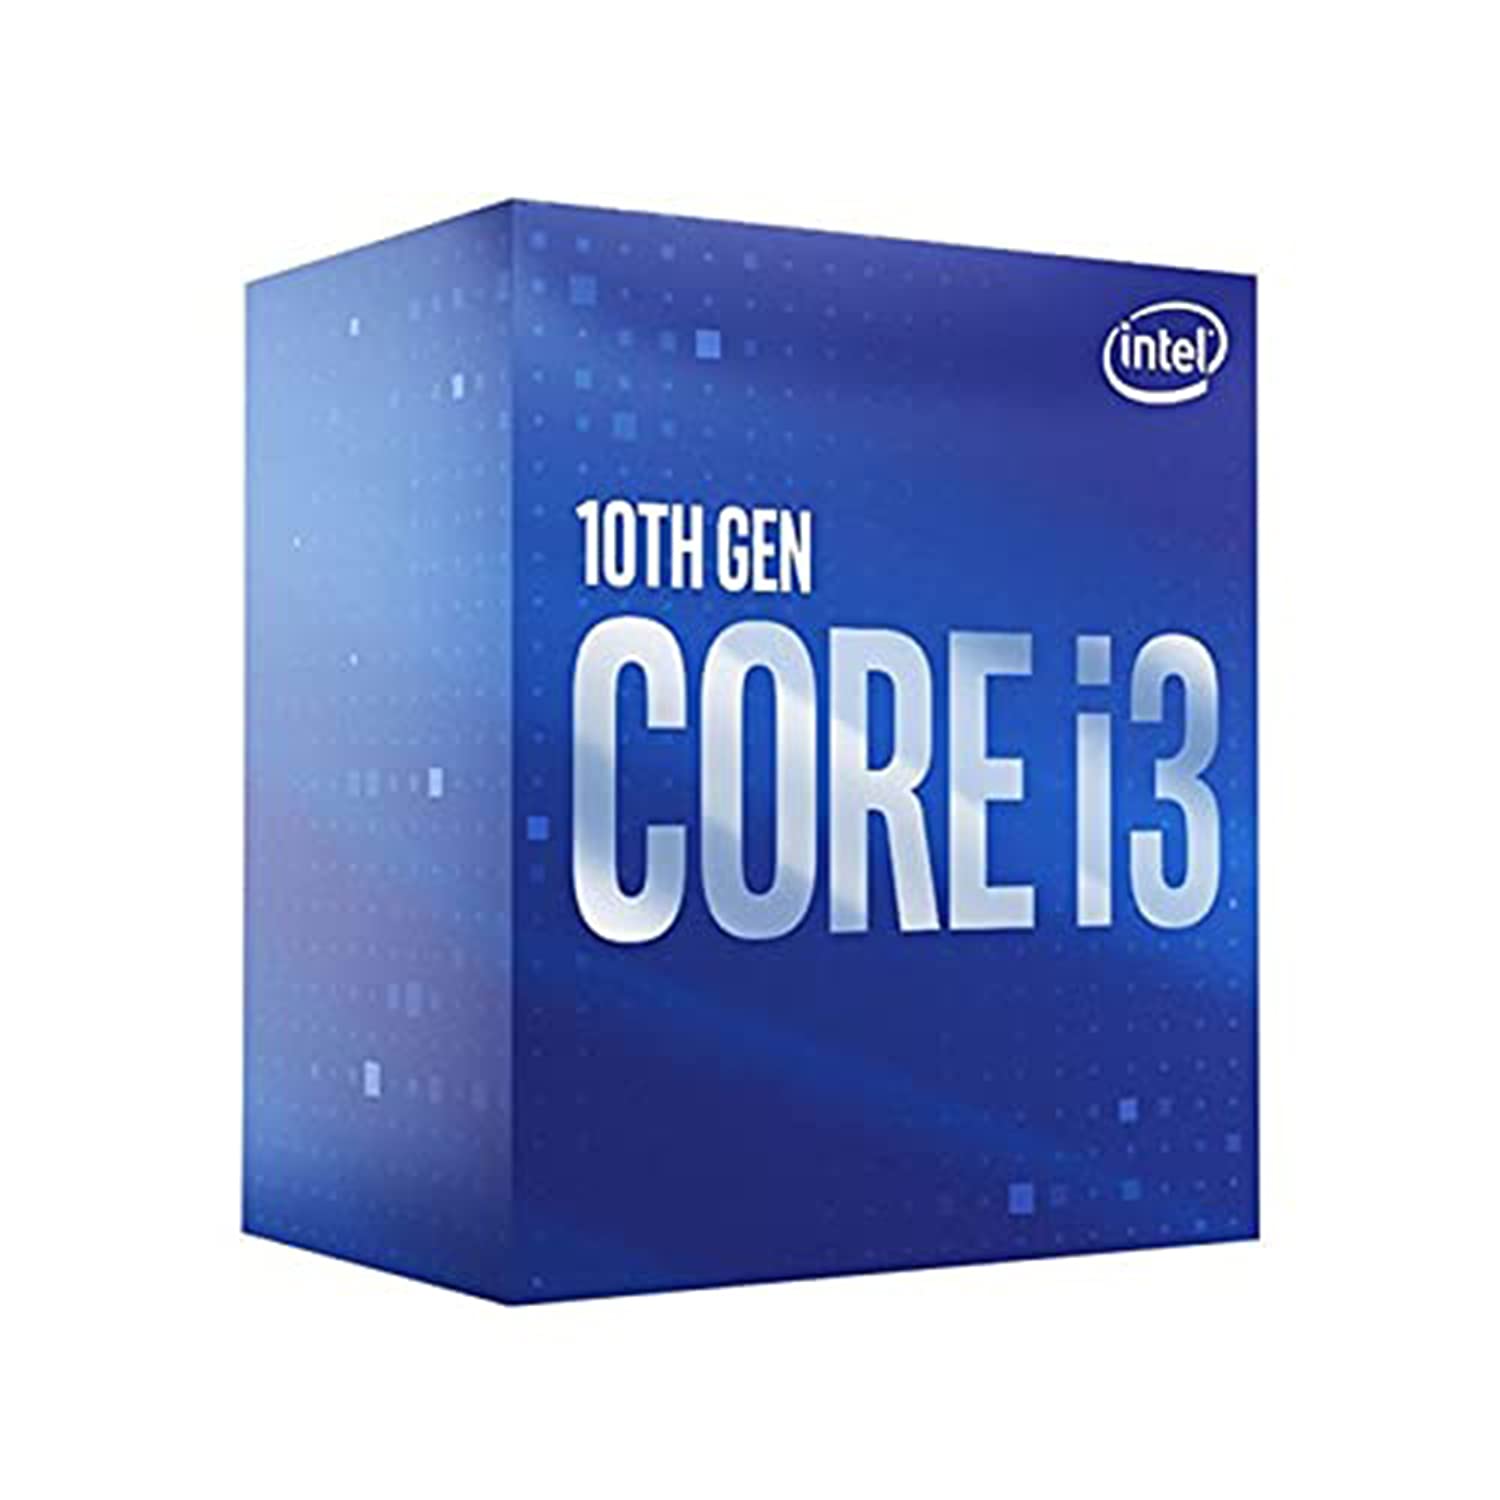 Intel Core i3-10100F 10th Generation LGA1200 Desktop Processor 4, 4 Cores 8 Threads up to 4.30GHz 6MB Cache-Processor-dealsplant